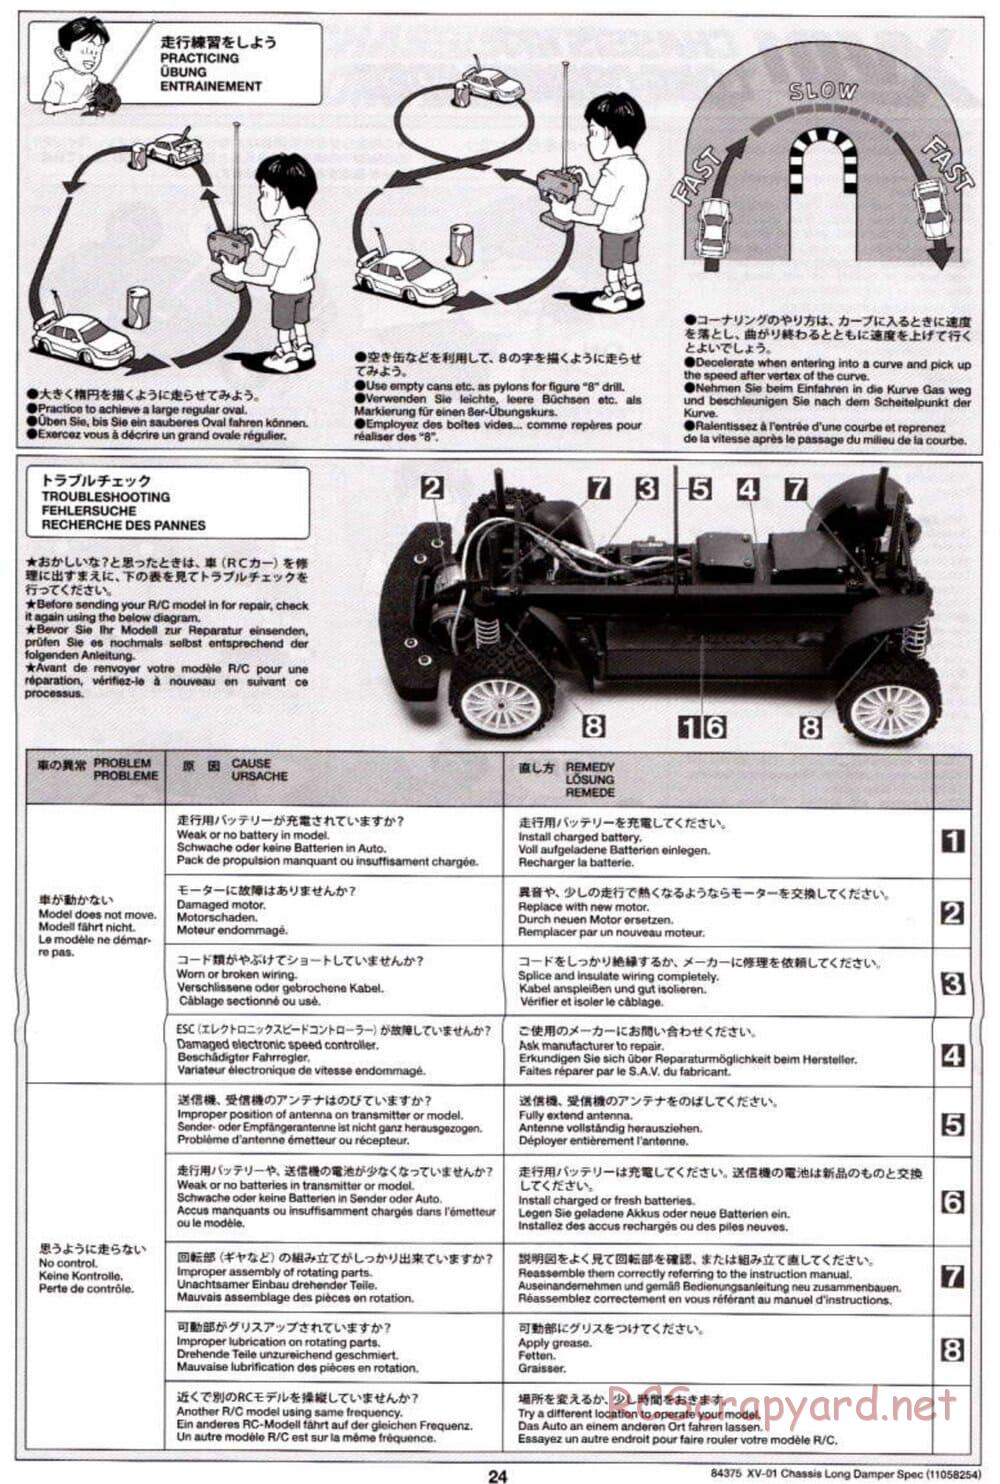 Tamiya - XV-01 Long Damper Spec Chassis - Manual - Page 24